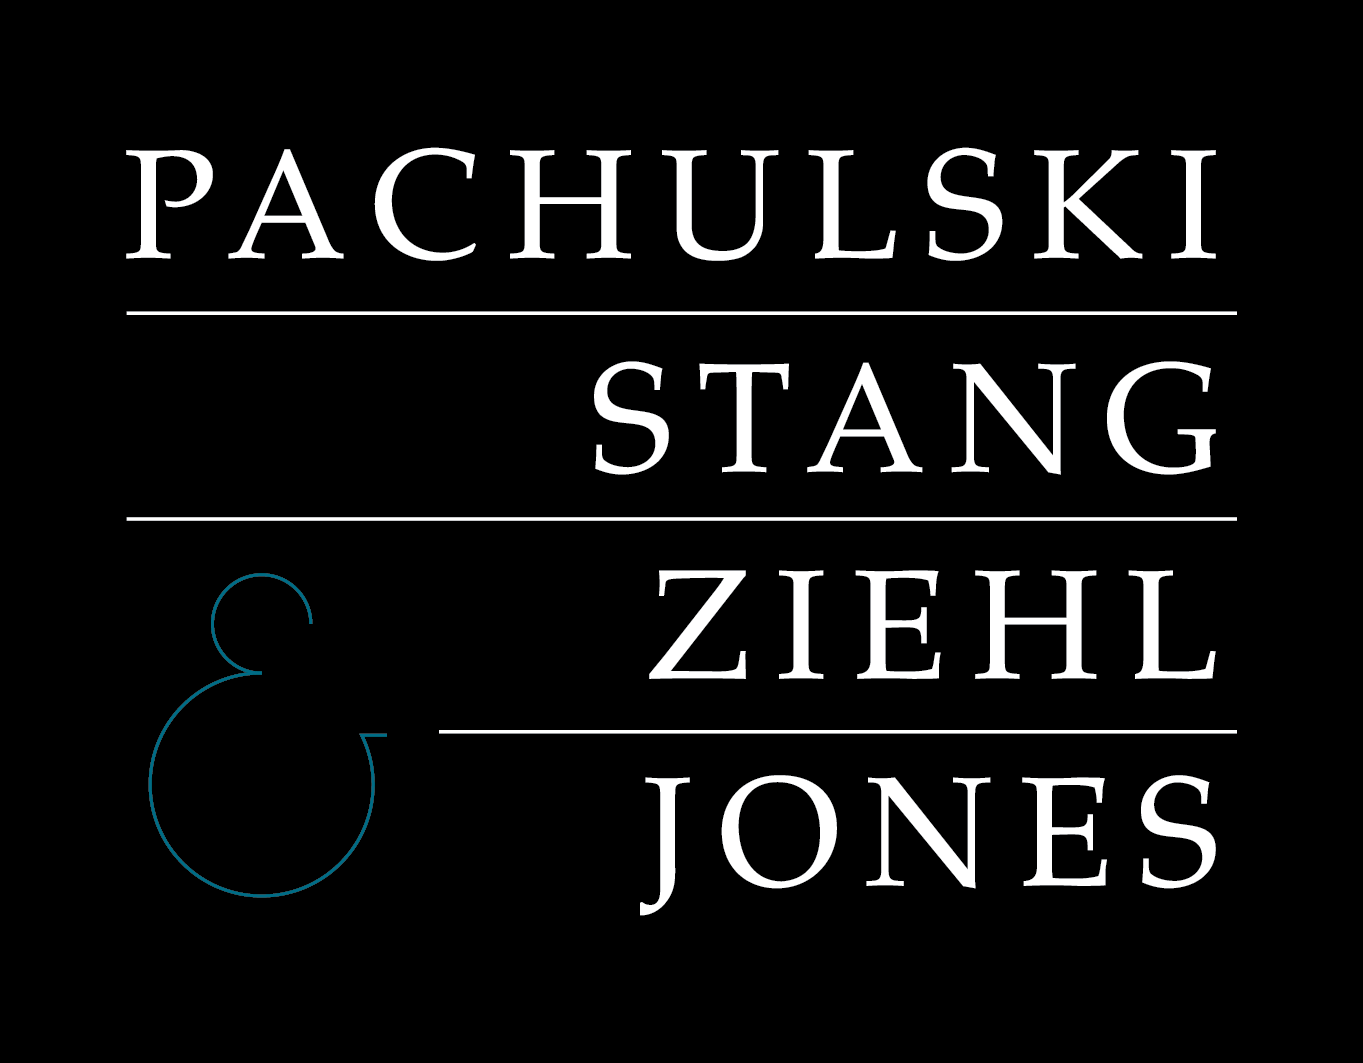 Pachulski Stang Ziehl & Jones